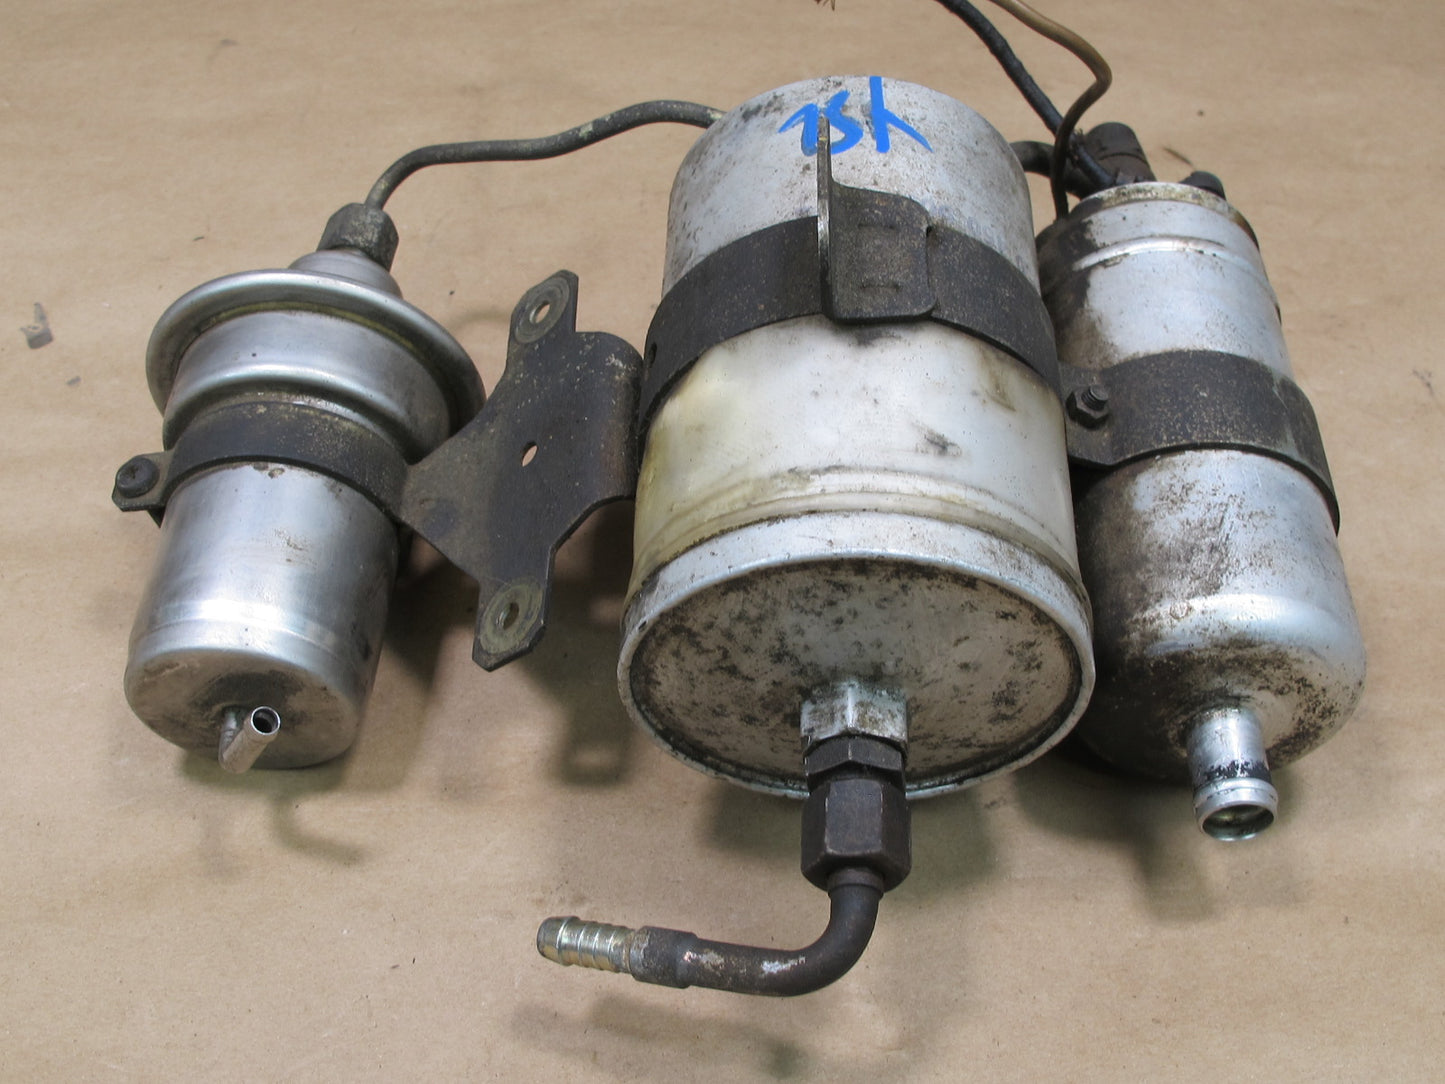 81-85 Mercedes R107 380SL Fuel Filter & Pump Assembly w Cover OEM